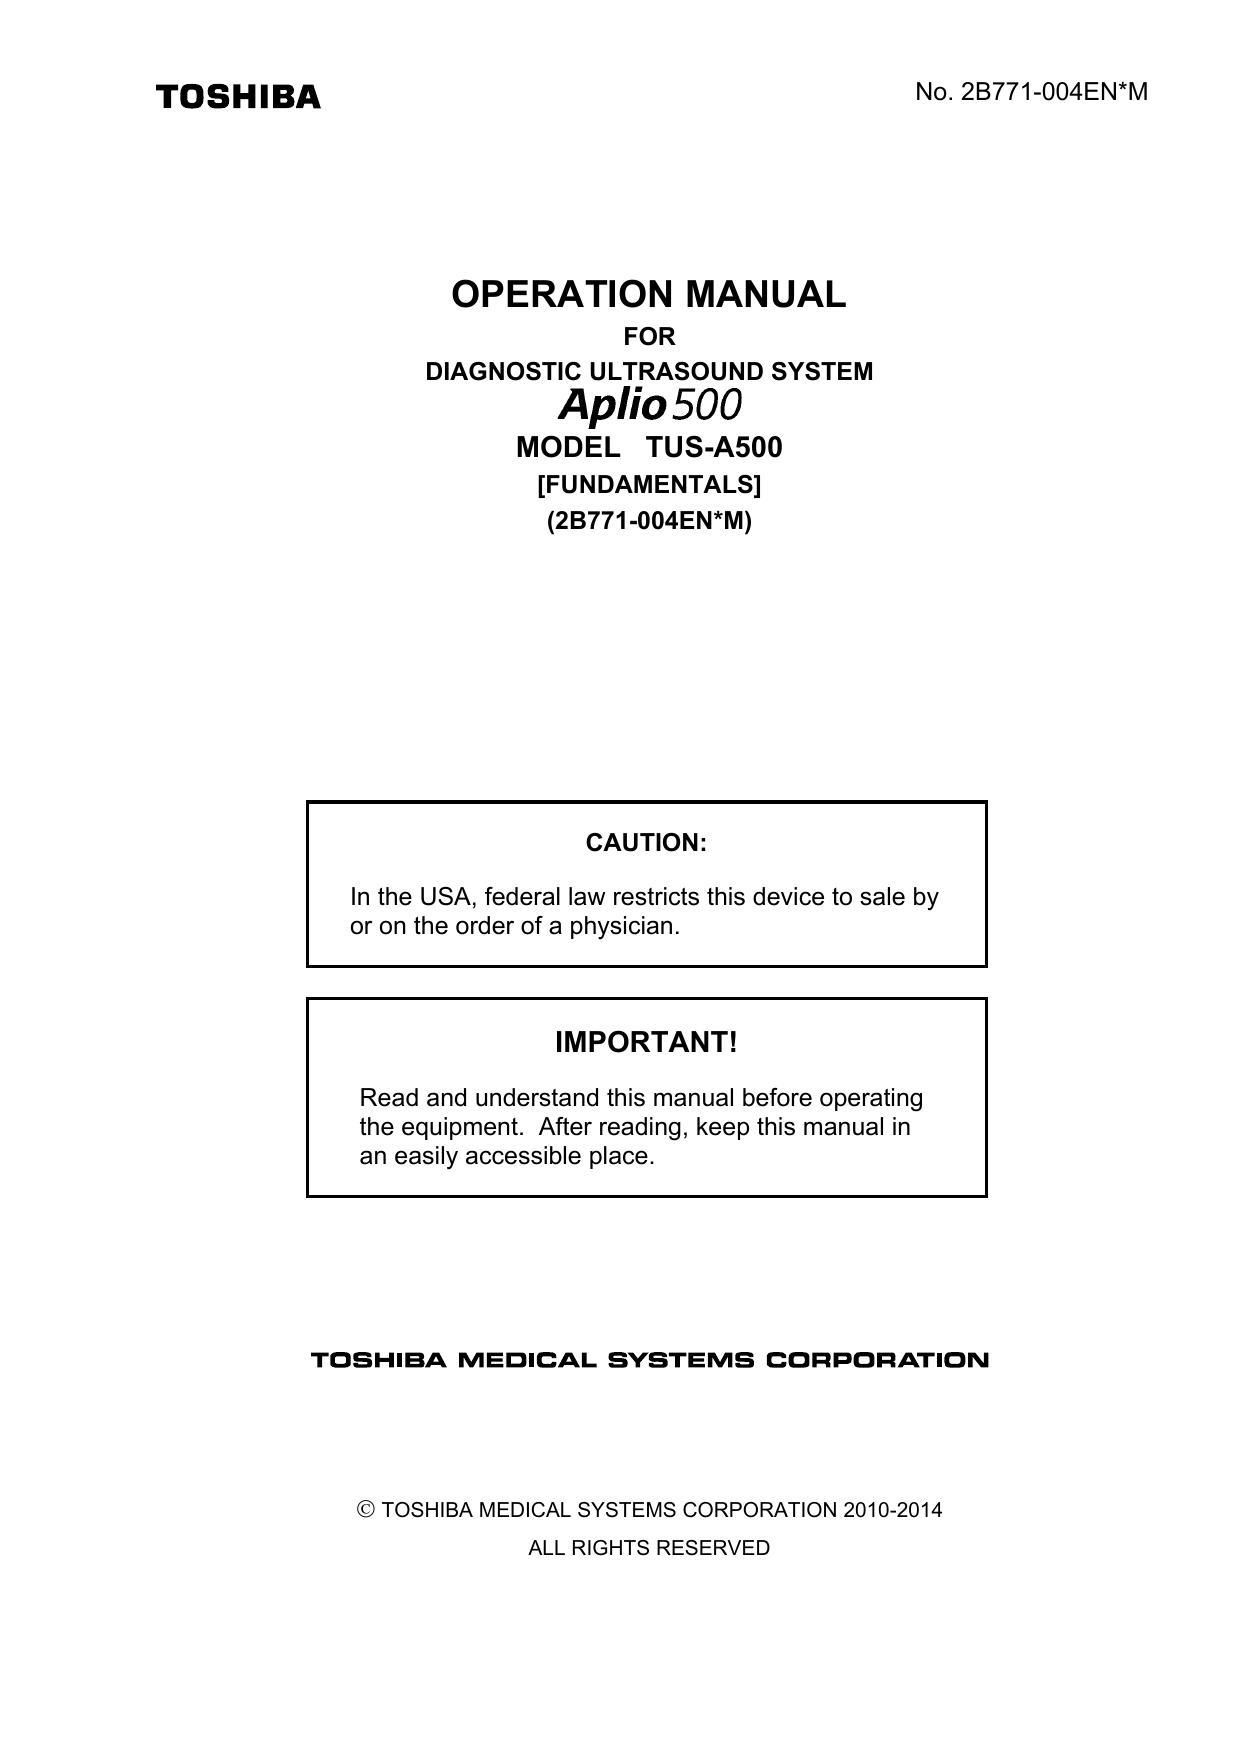 operation-manual-for-diagnostic-ultrasound-system-aplio-500-model-tus-asoo-fundamentals.pdf